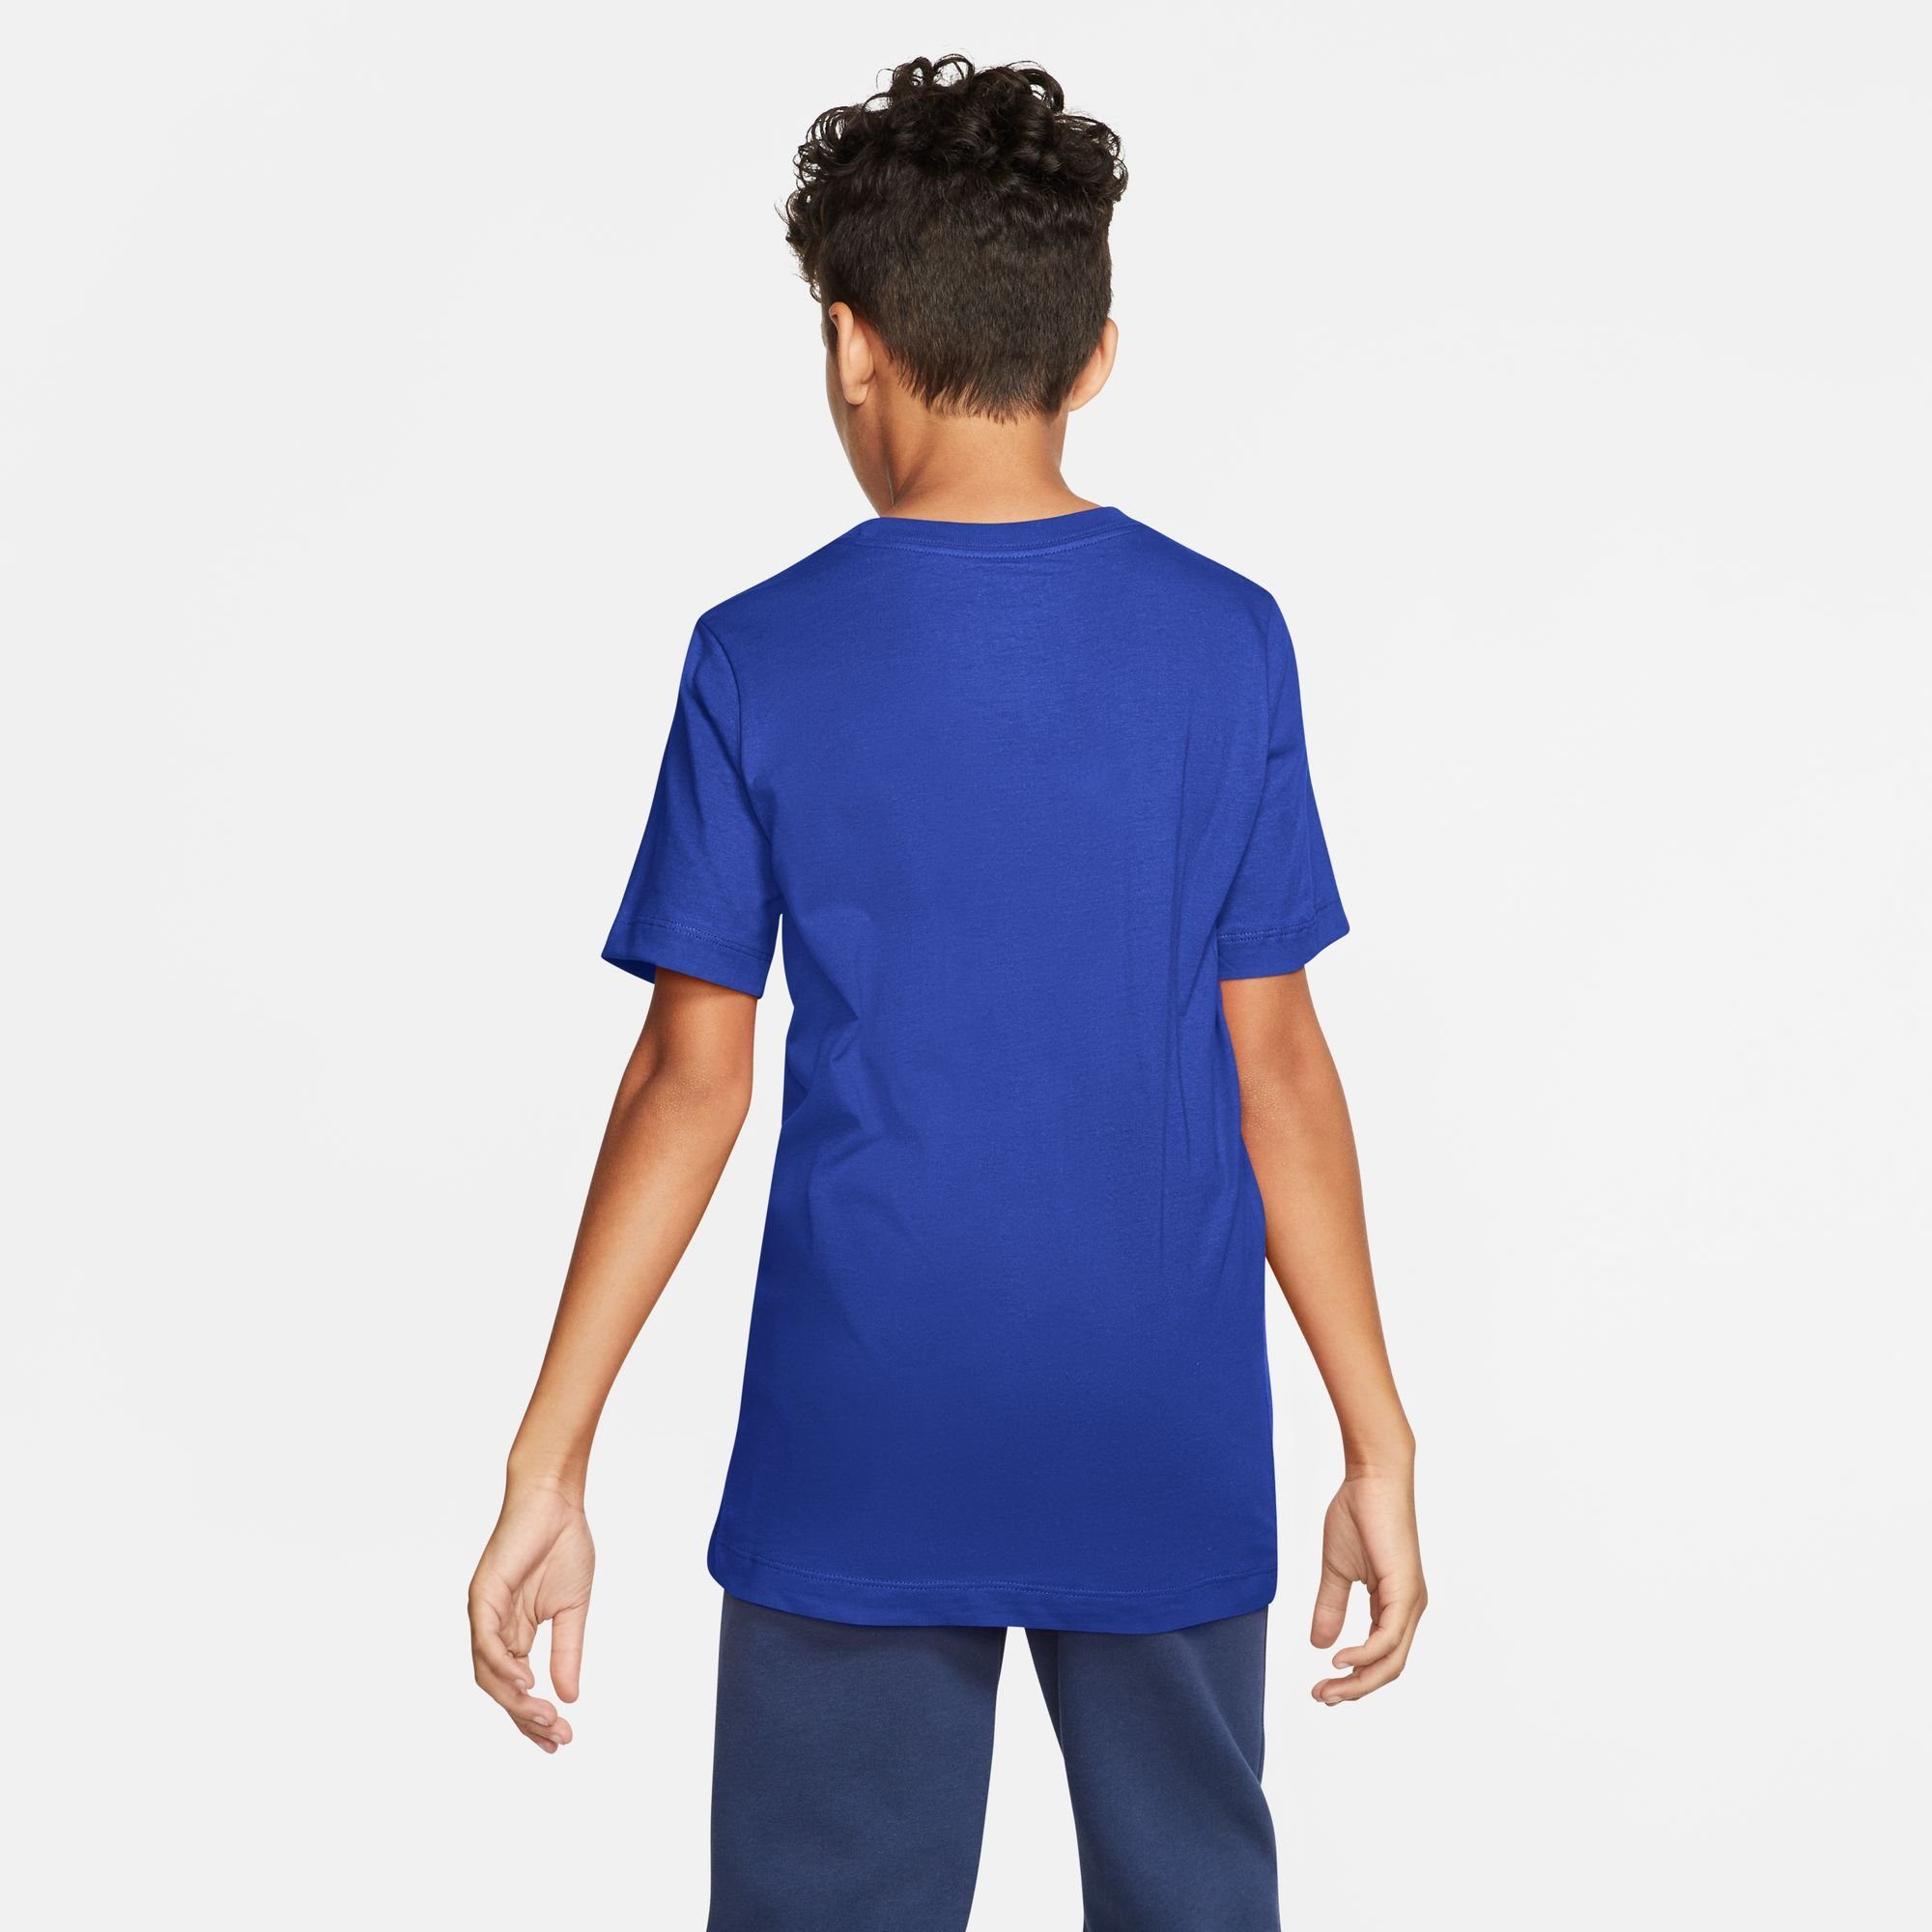 NAVY BIG KIDS' GAME T-Shirt T-SHIRT Nike Sportswear ROYAL/MIDNIGHT COTTON